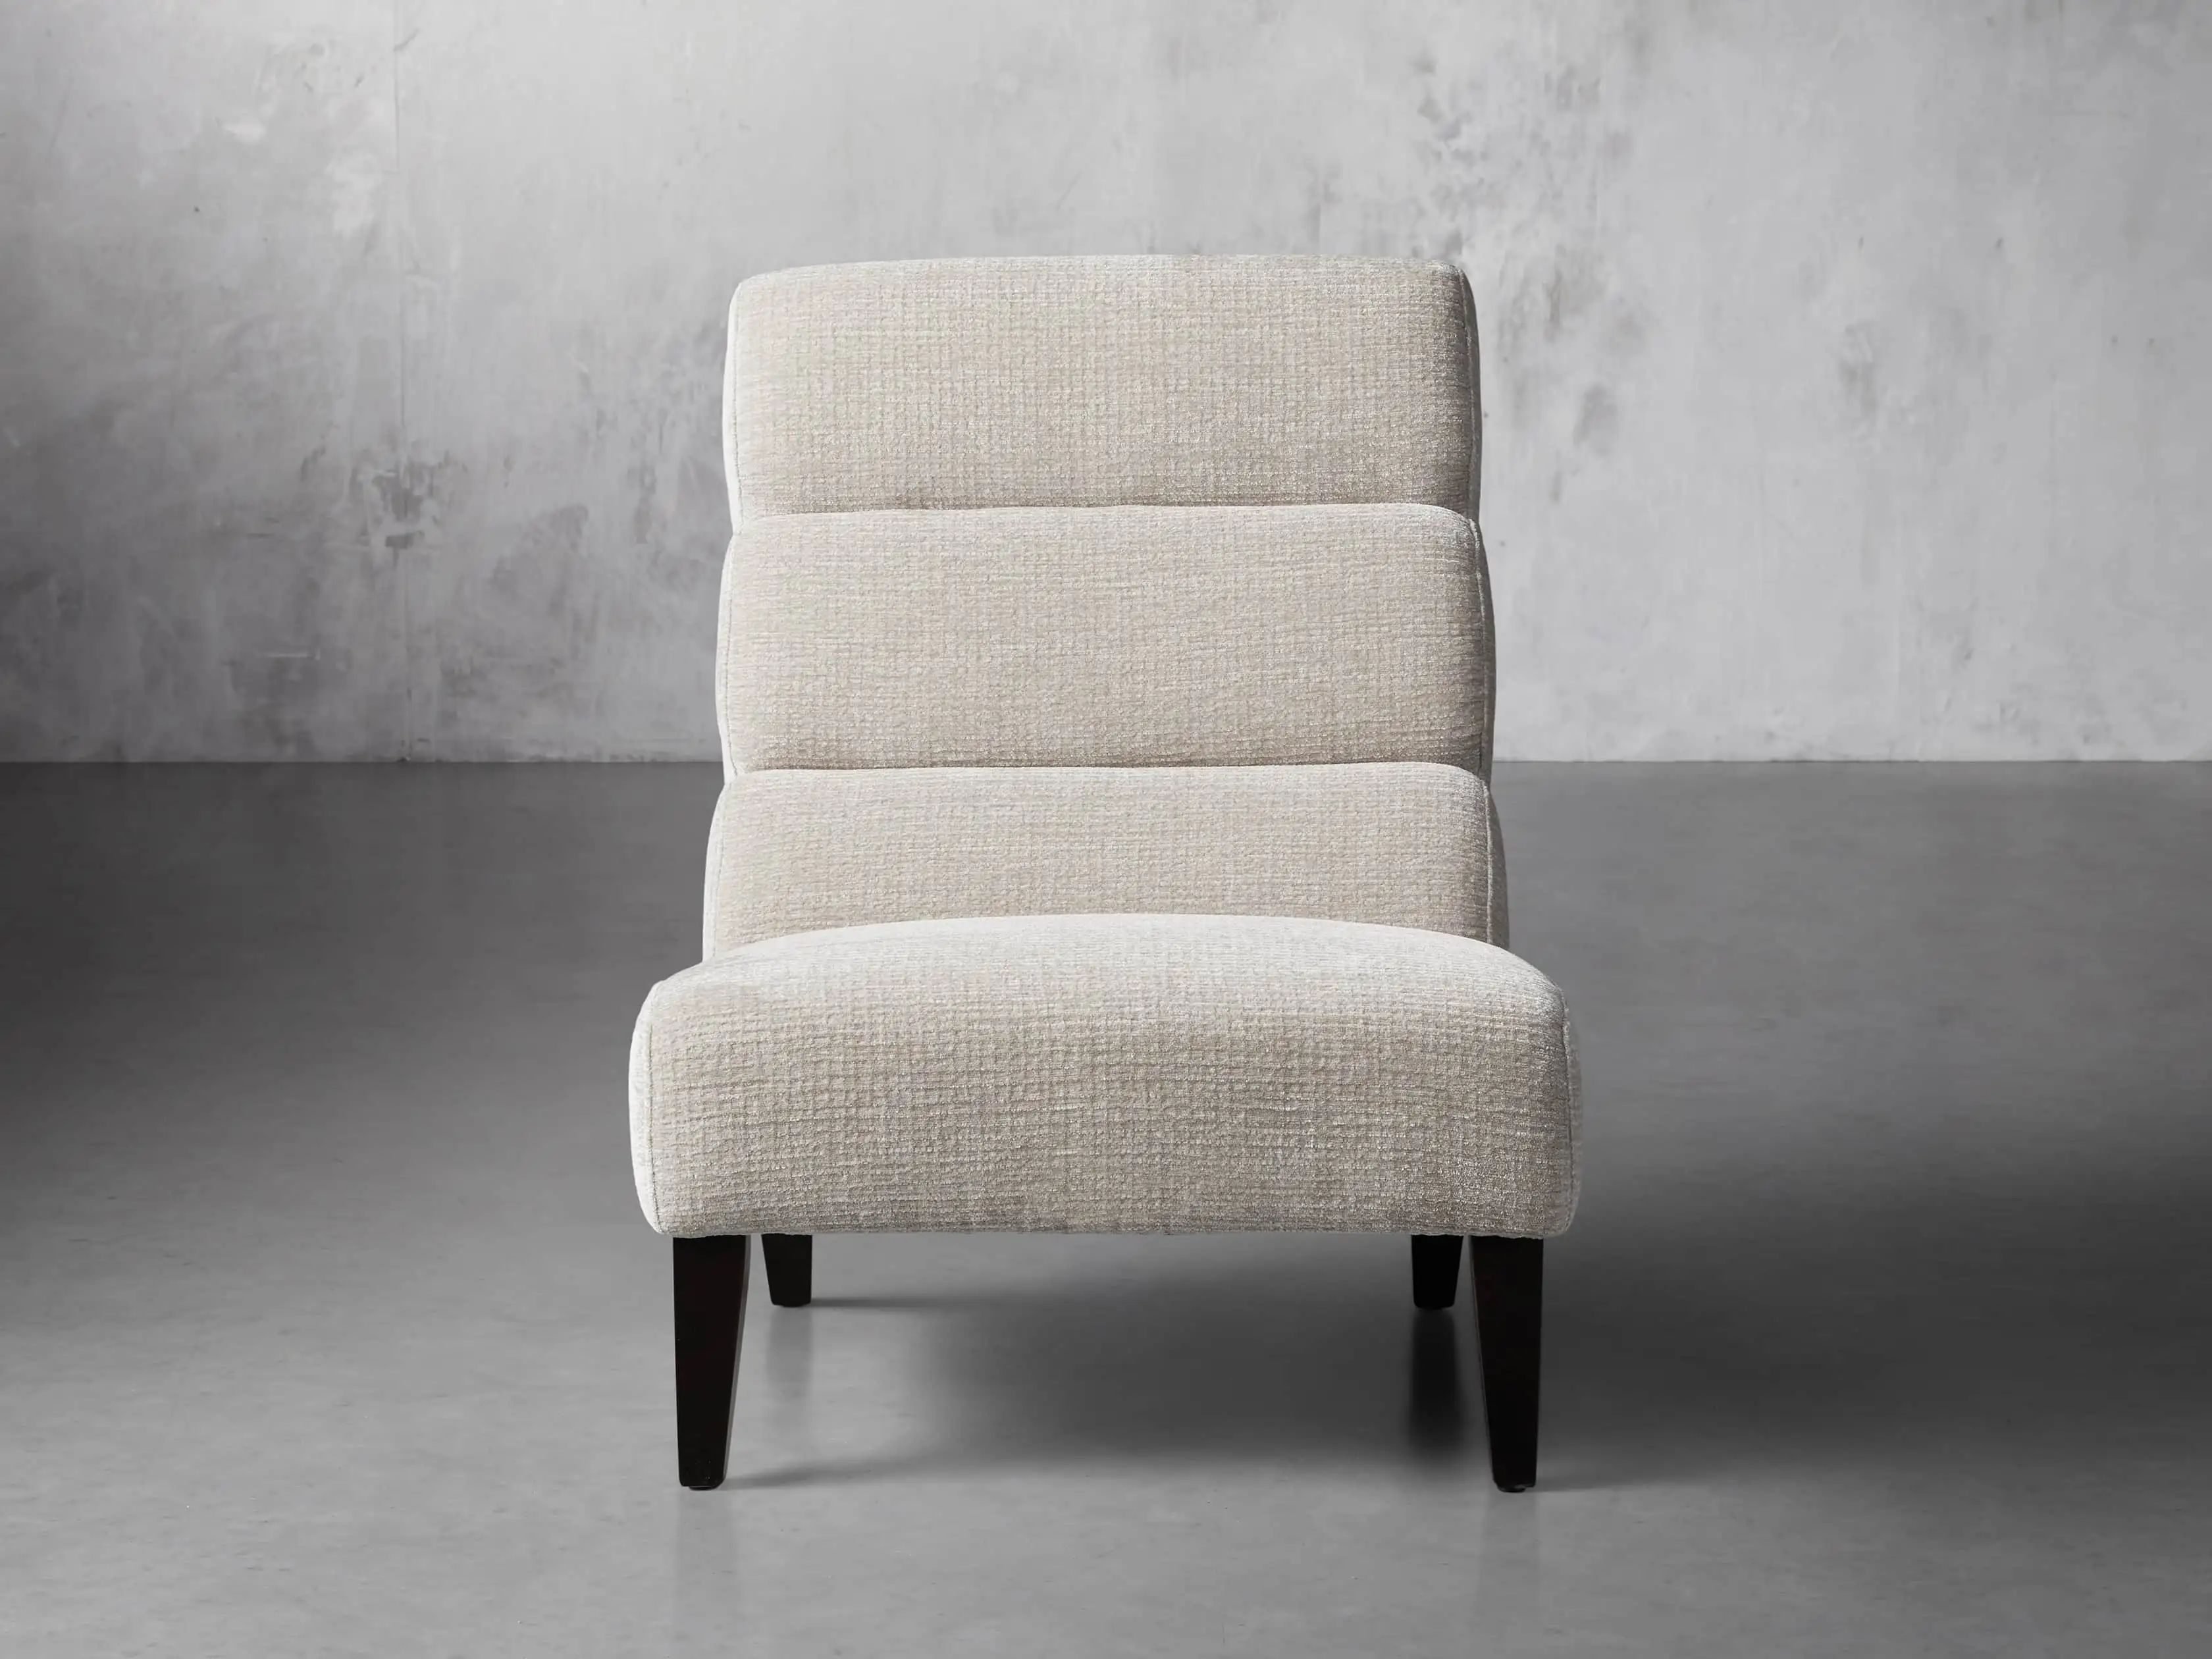 Eldon Upholstered 29"" Armless Chair in Shayna Porcelain | Arhaus